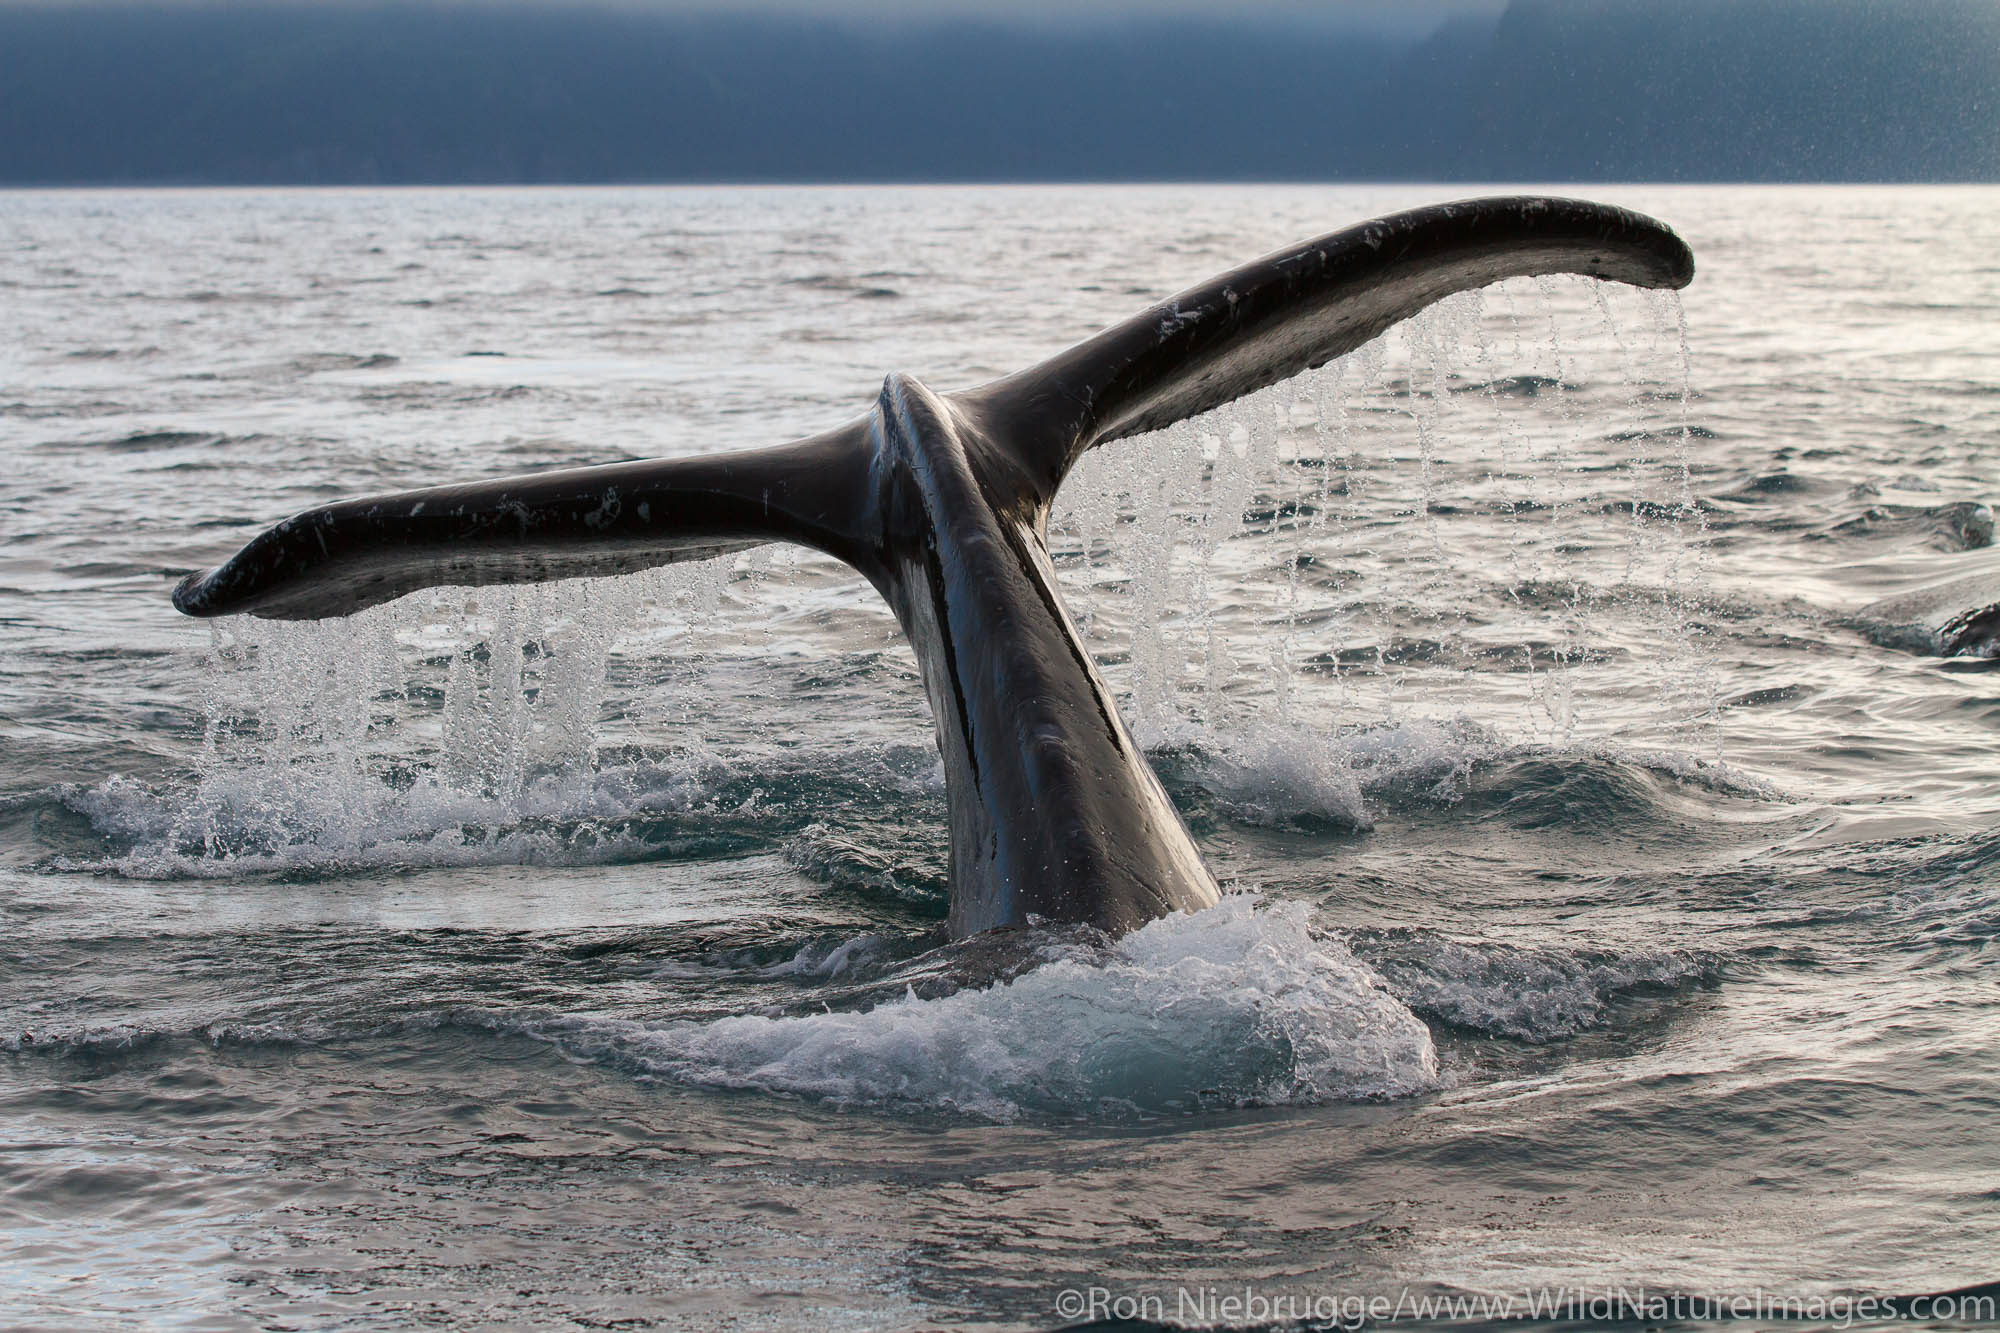 Humpback whale, Kenai Fjords National Park, near Seward, Alaska.